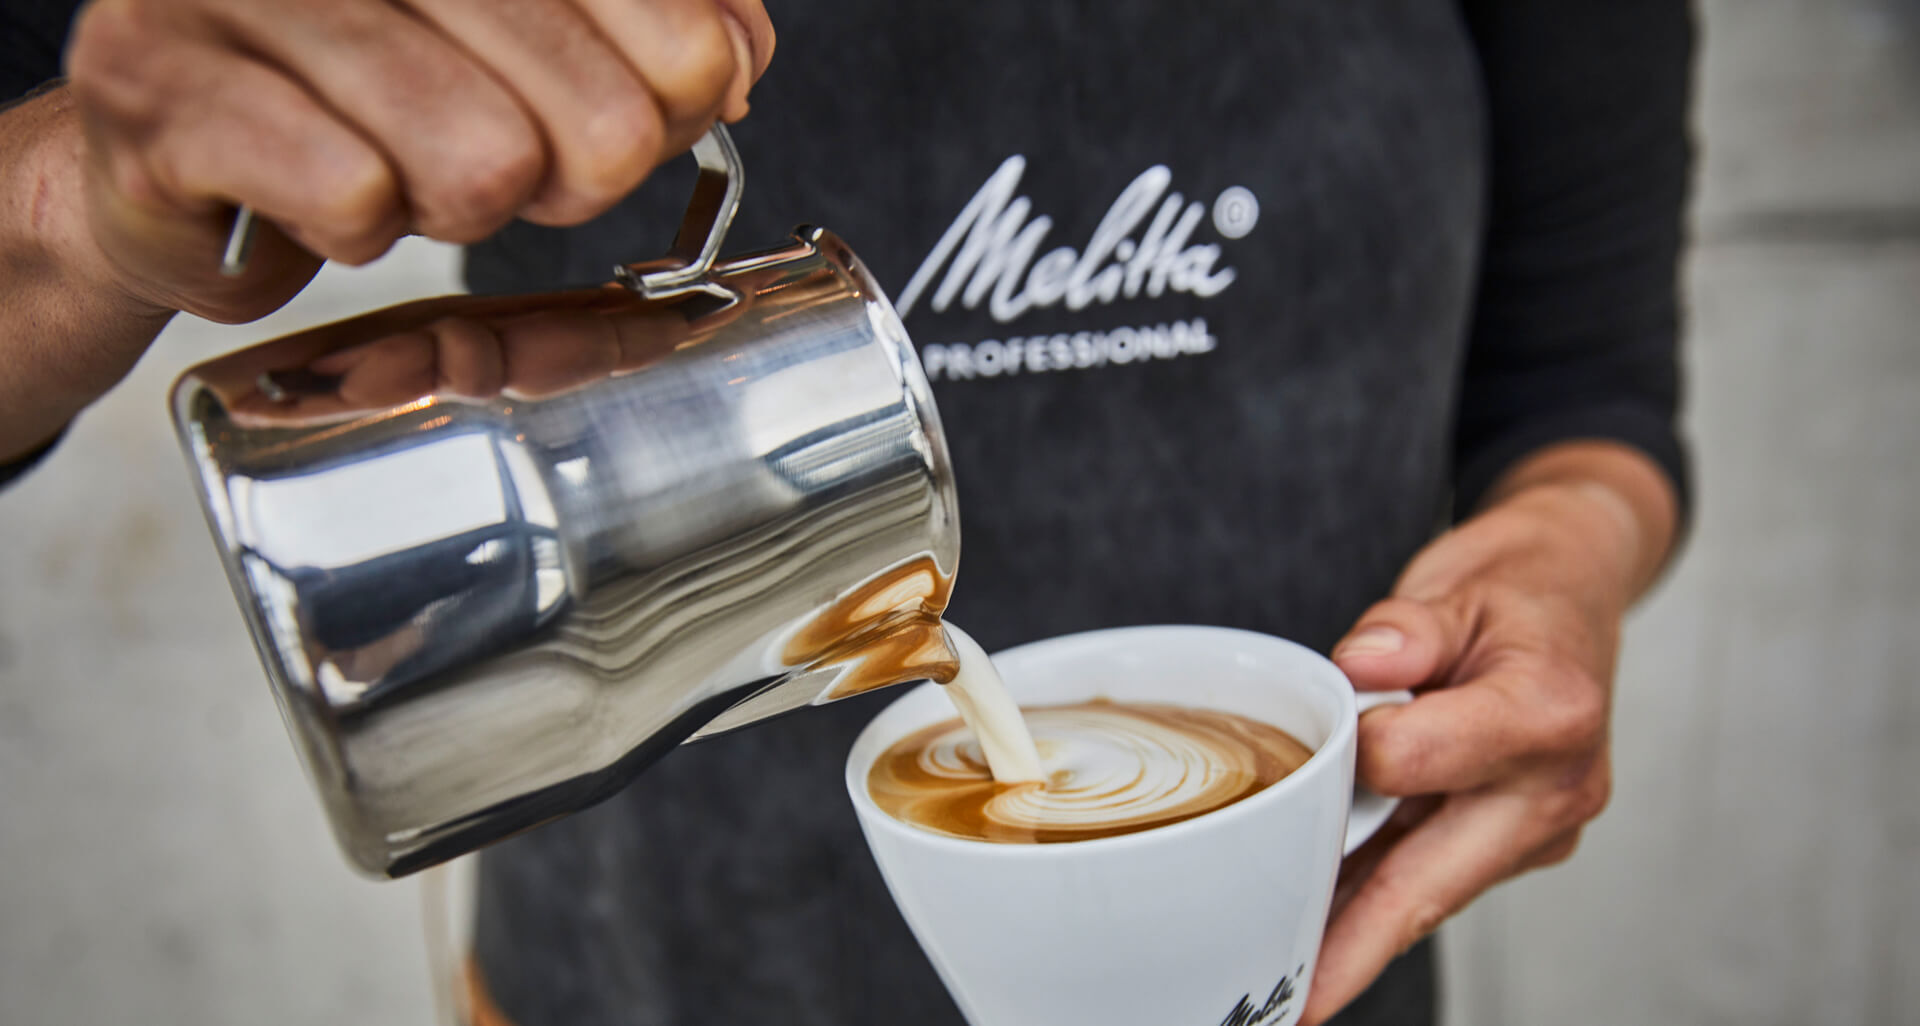 Melitta Professional - partner for professional coffee preparation